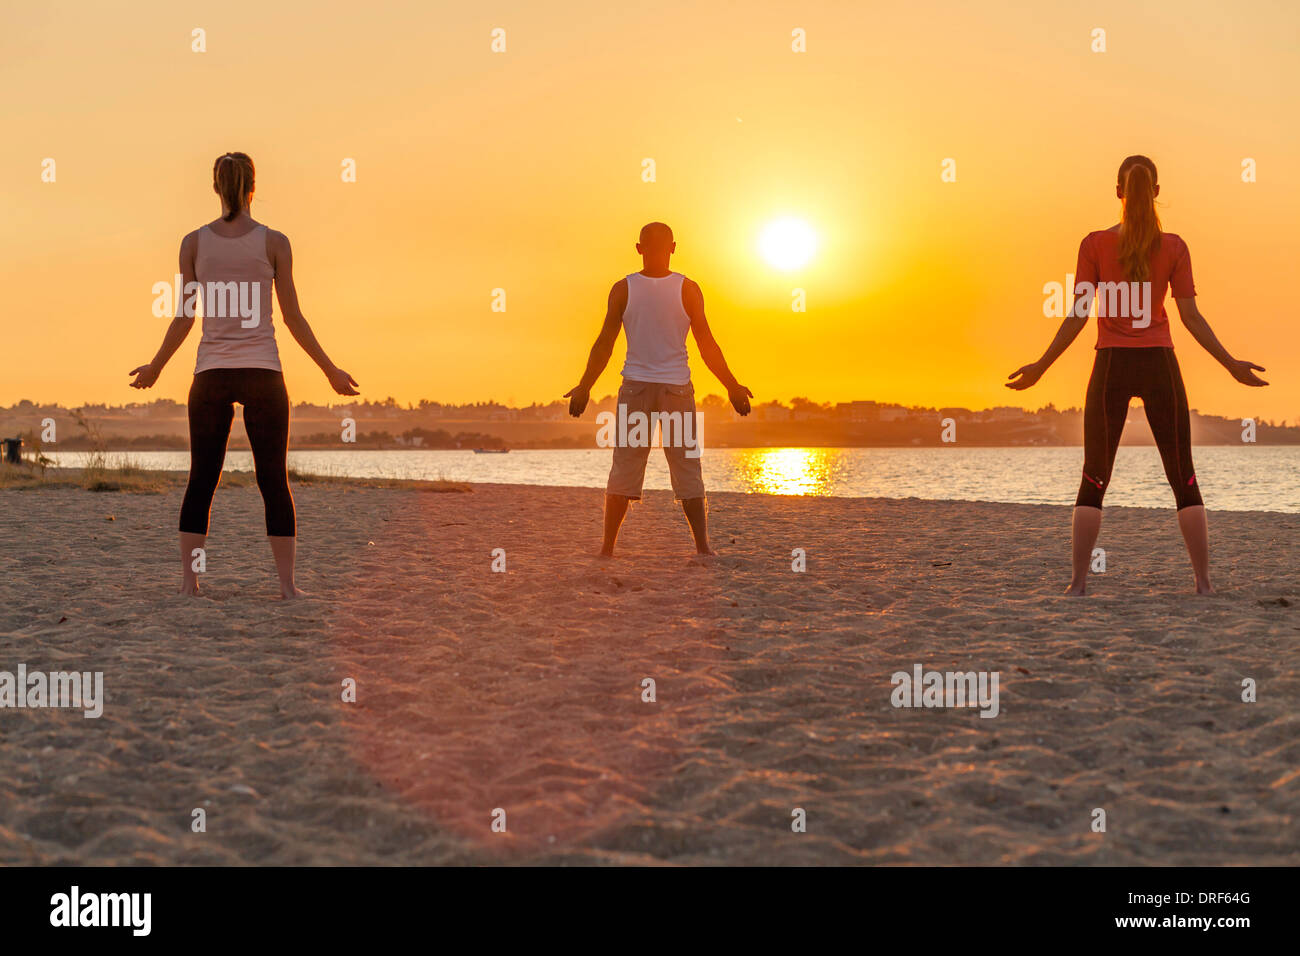 People practising yoga on beach, doing sun salutation Stock Photo